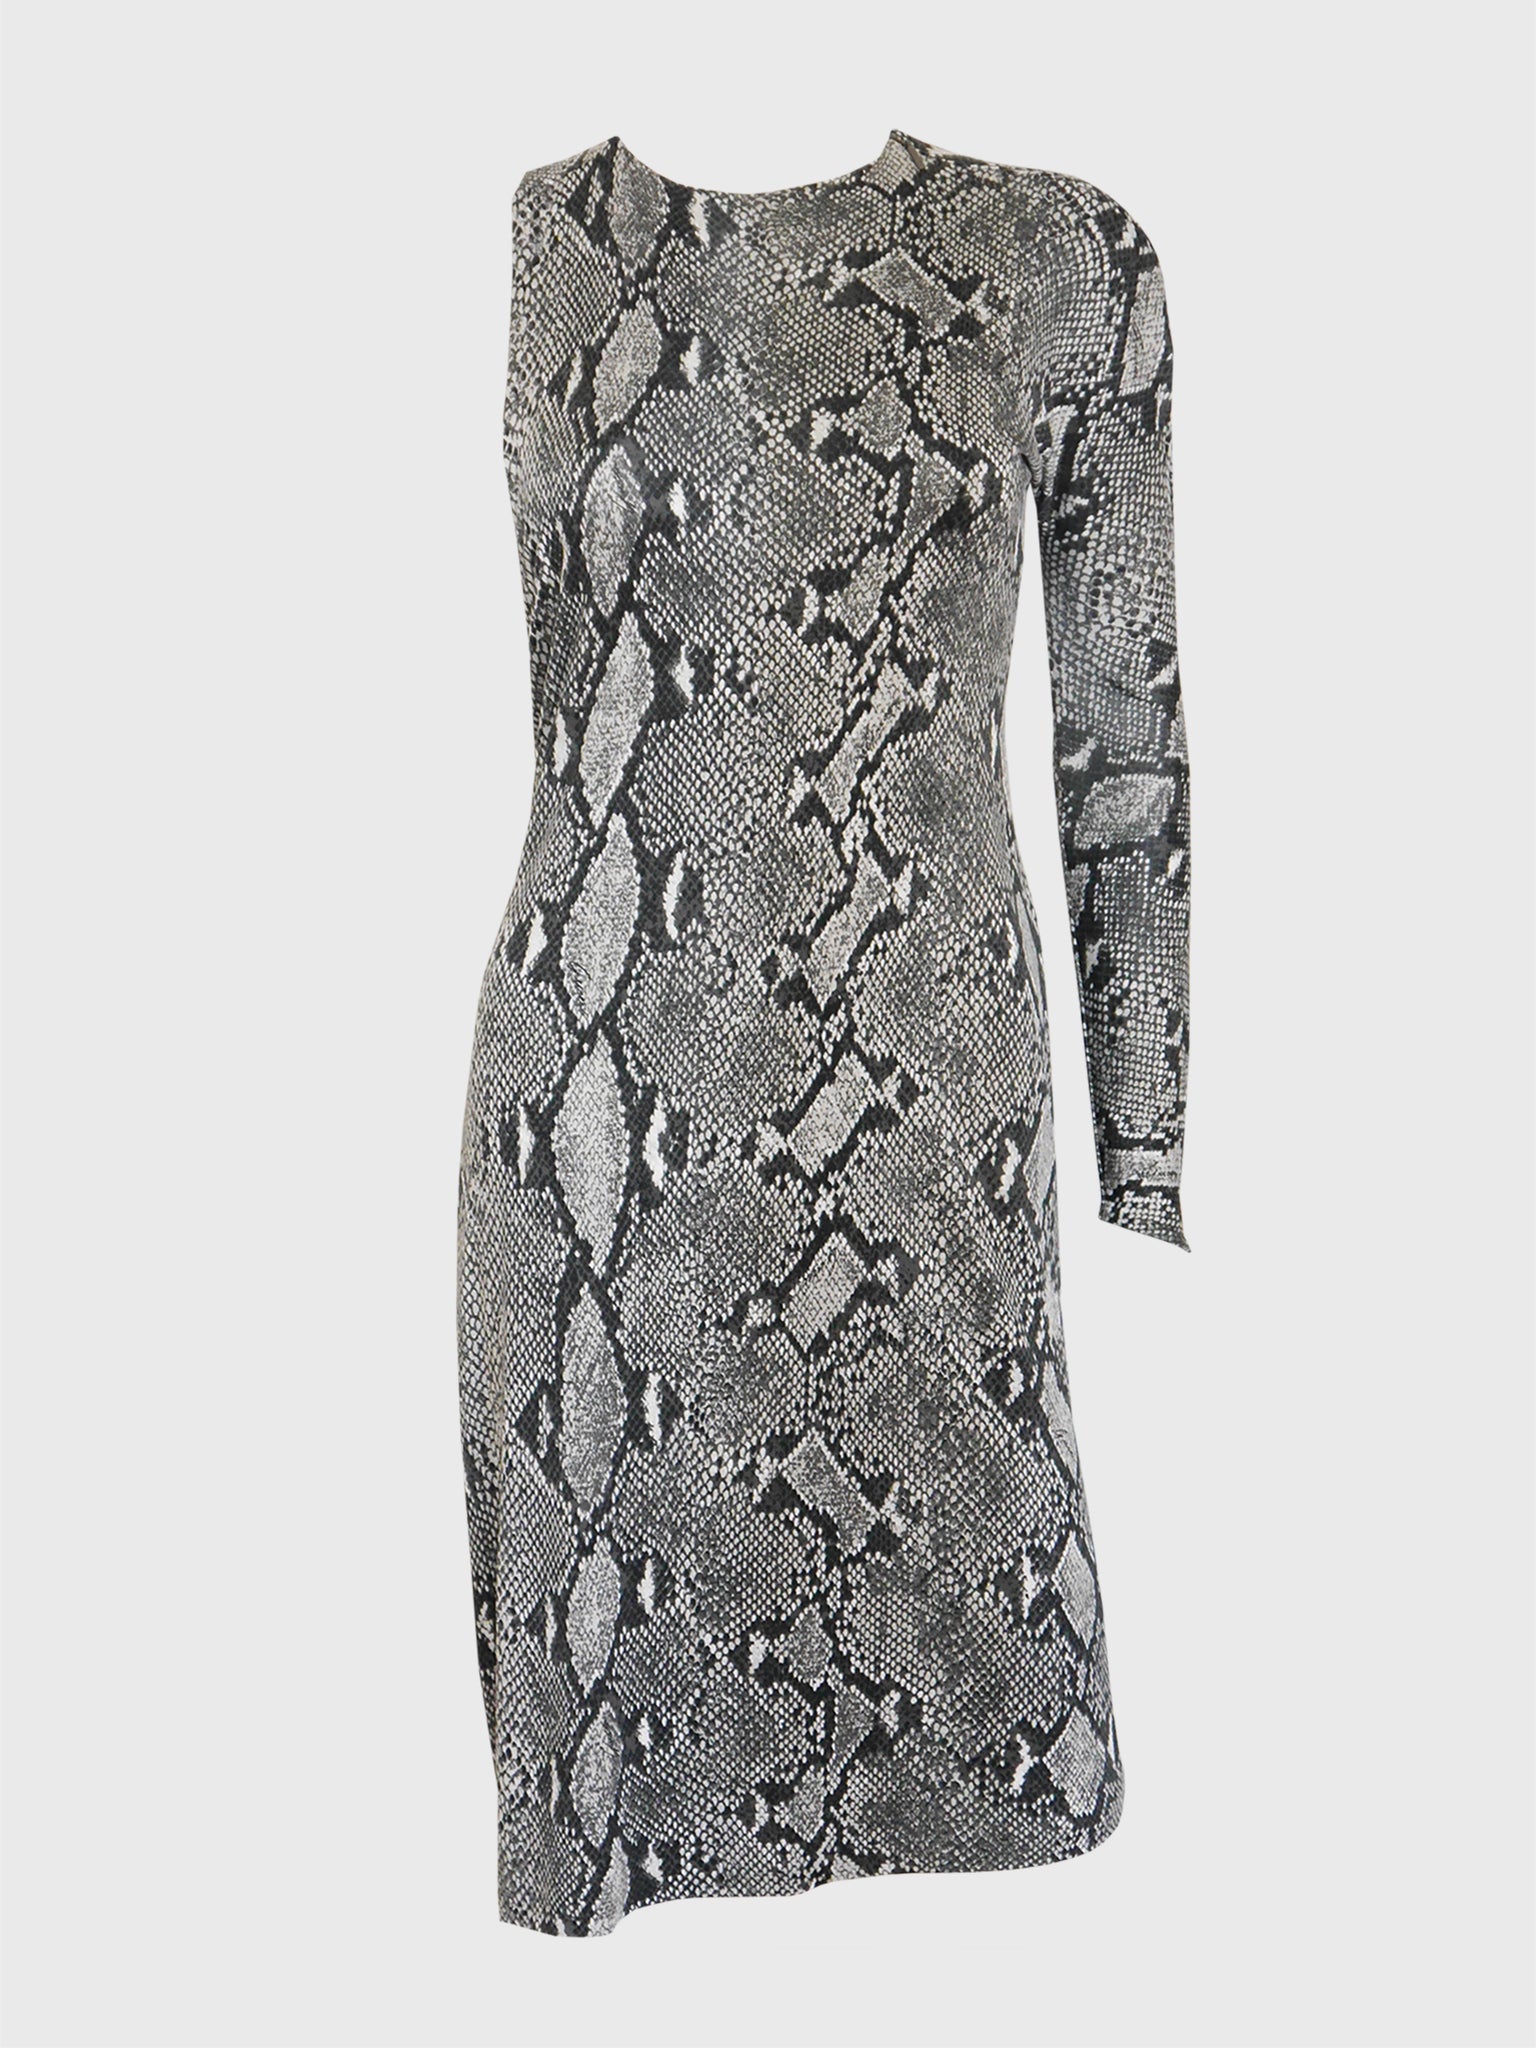 GUCCI by TOM FORD Spring 2000 Vintage Asymmetrical One-Sleeve Python Snake Print Dress